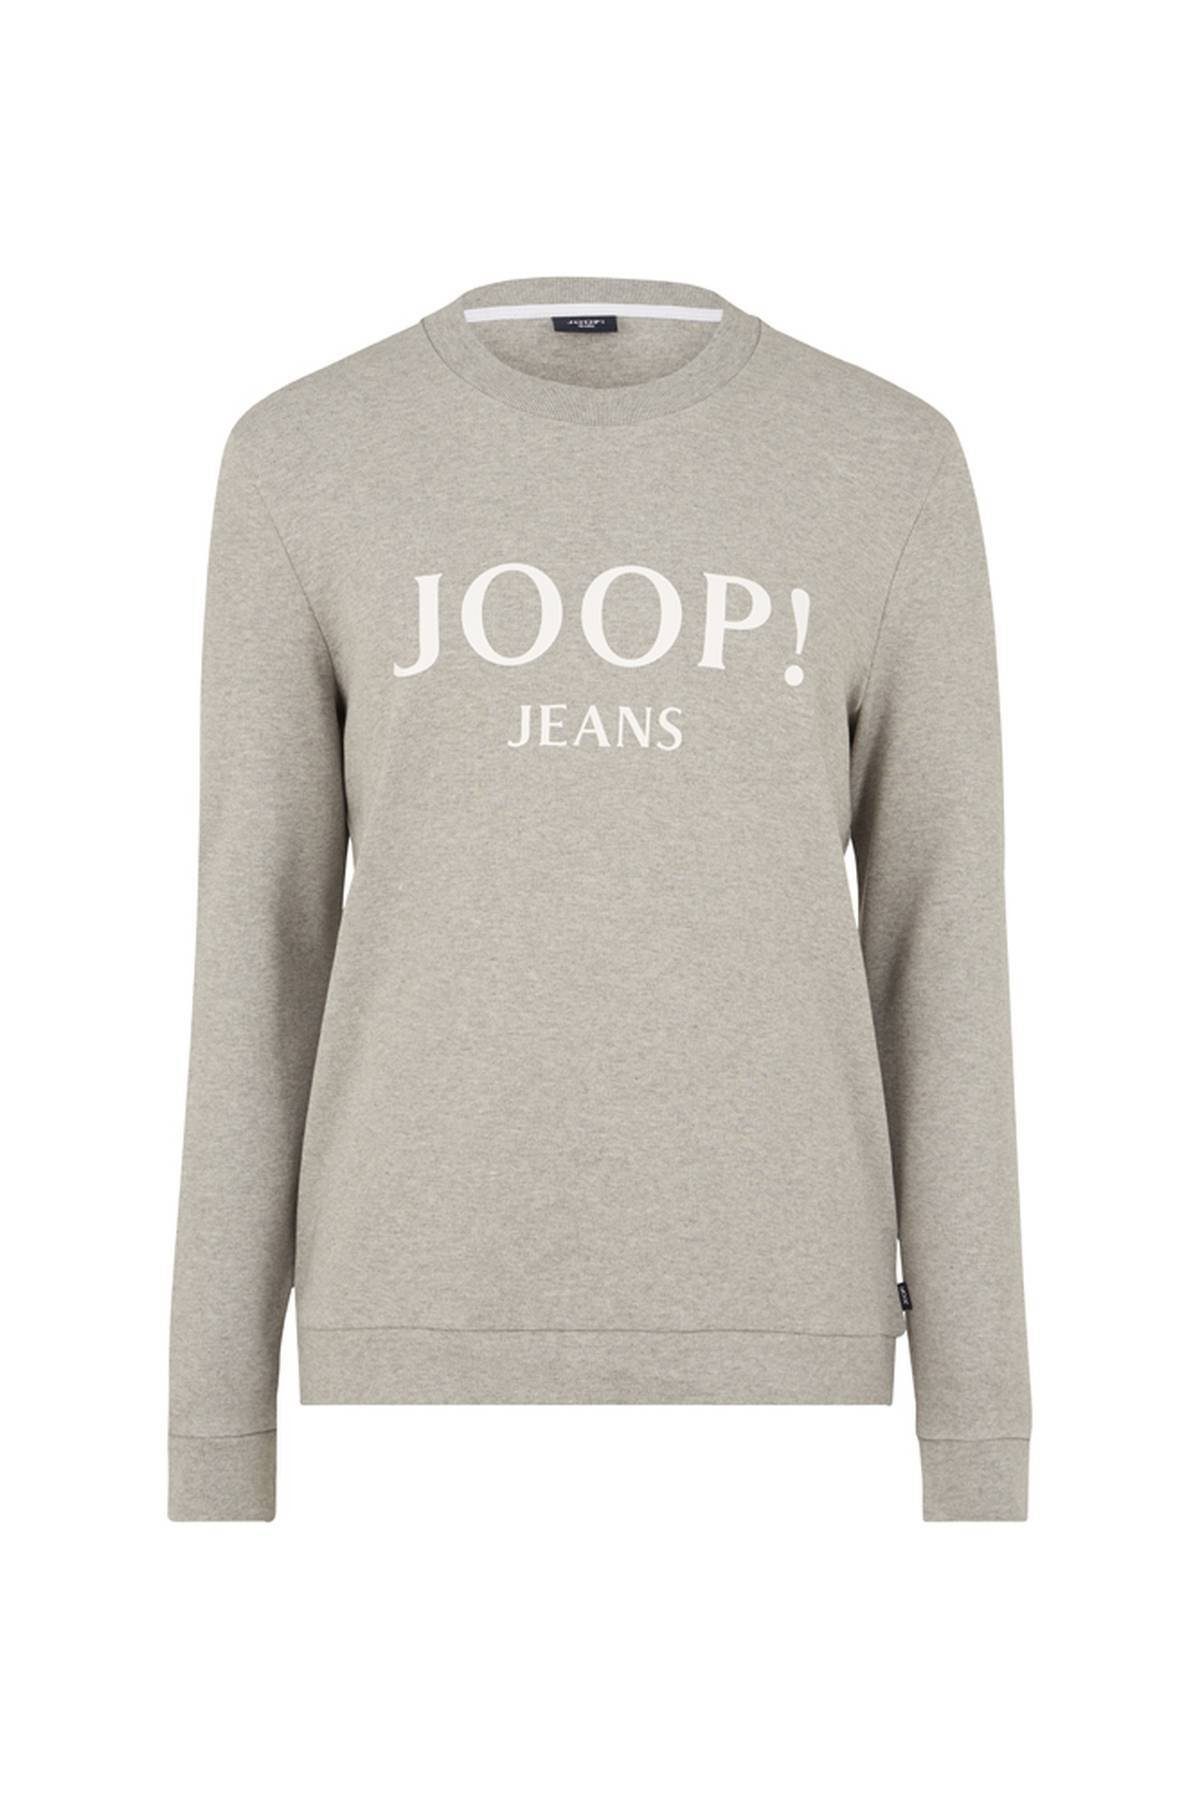 Joop Jeans Sweatshirt Herren Sweatshirt - JJJ-25Alfred, Sweater Grau